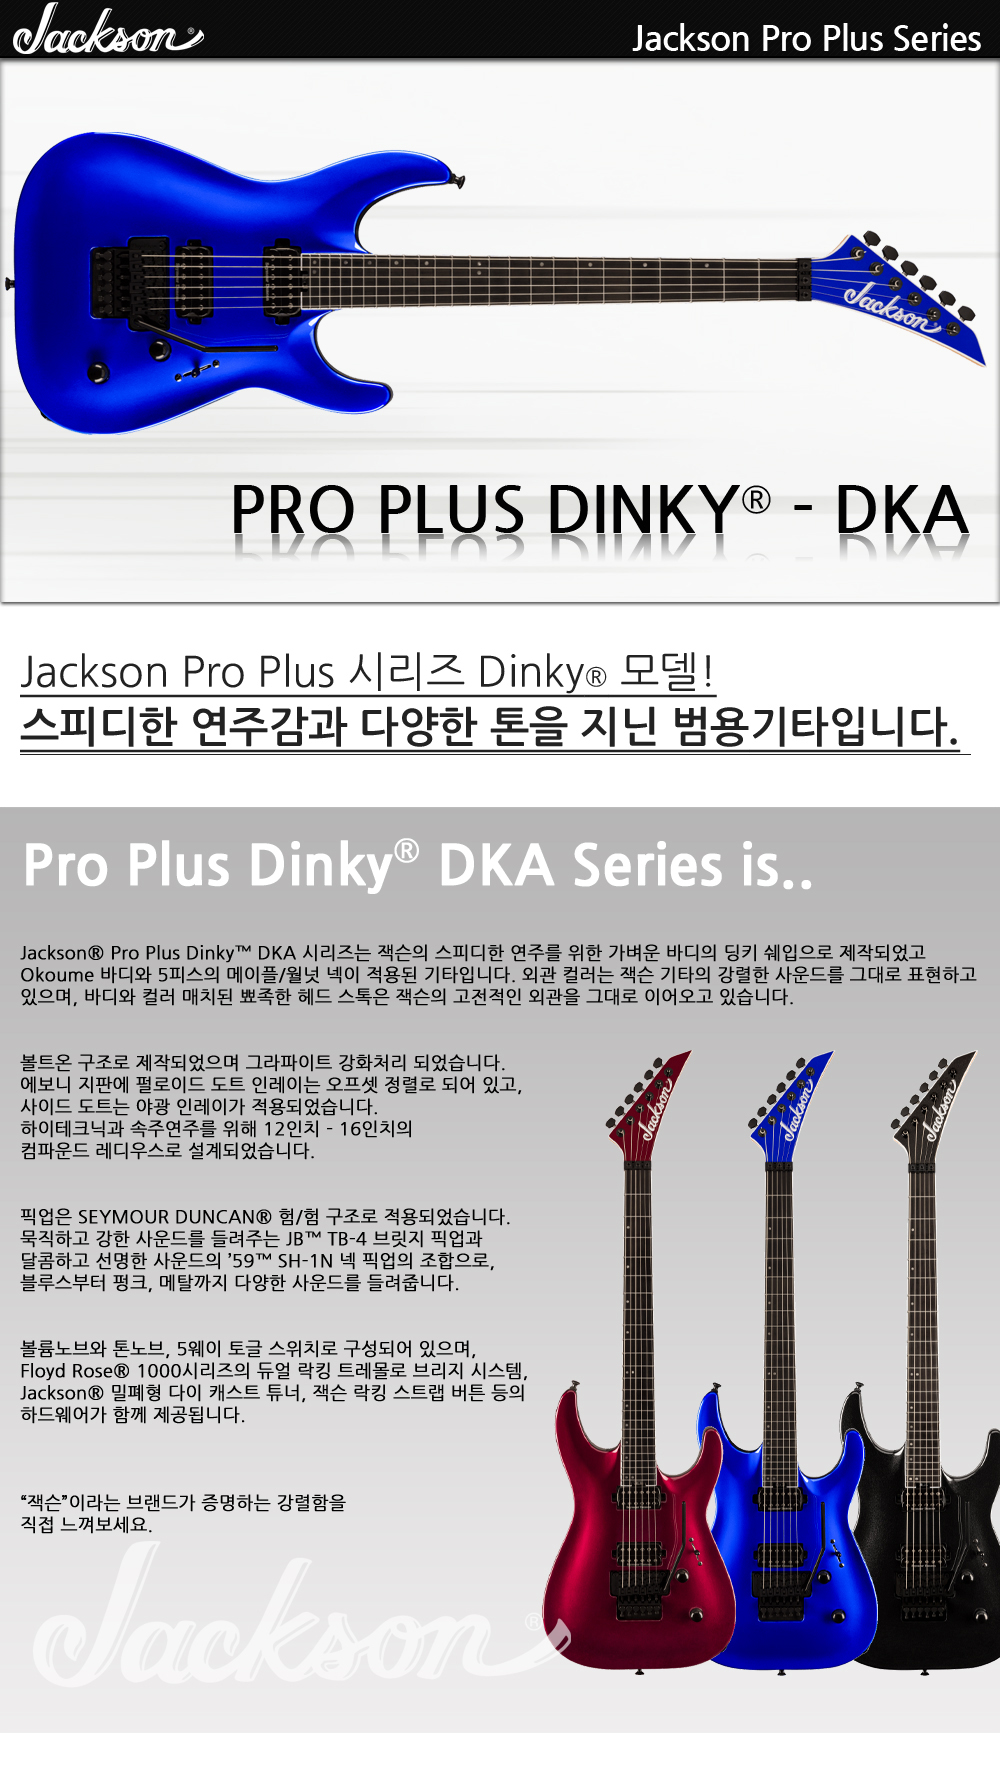 Jackson-ProPlus-Dinky-DKA-IndigoBlue_1_131256.jpg